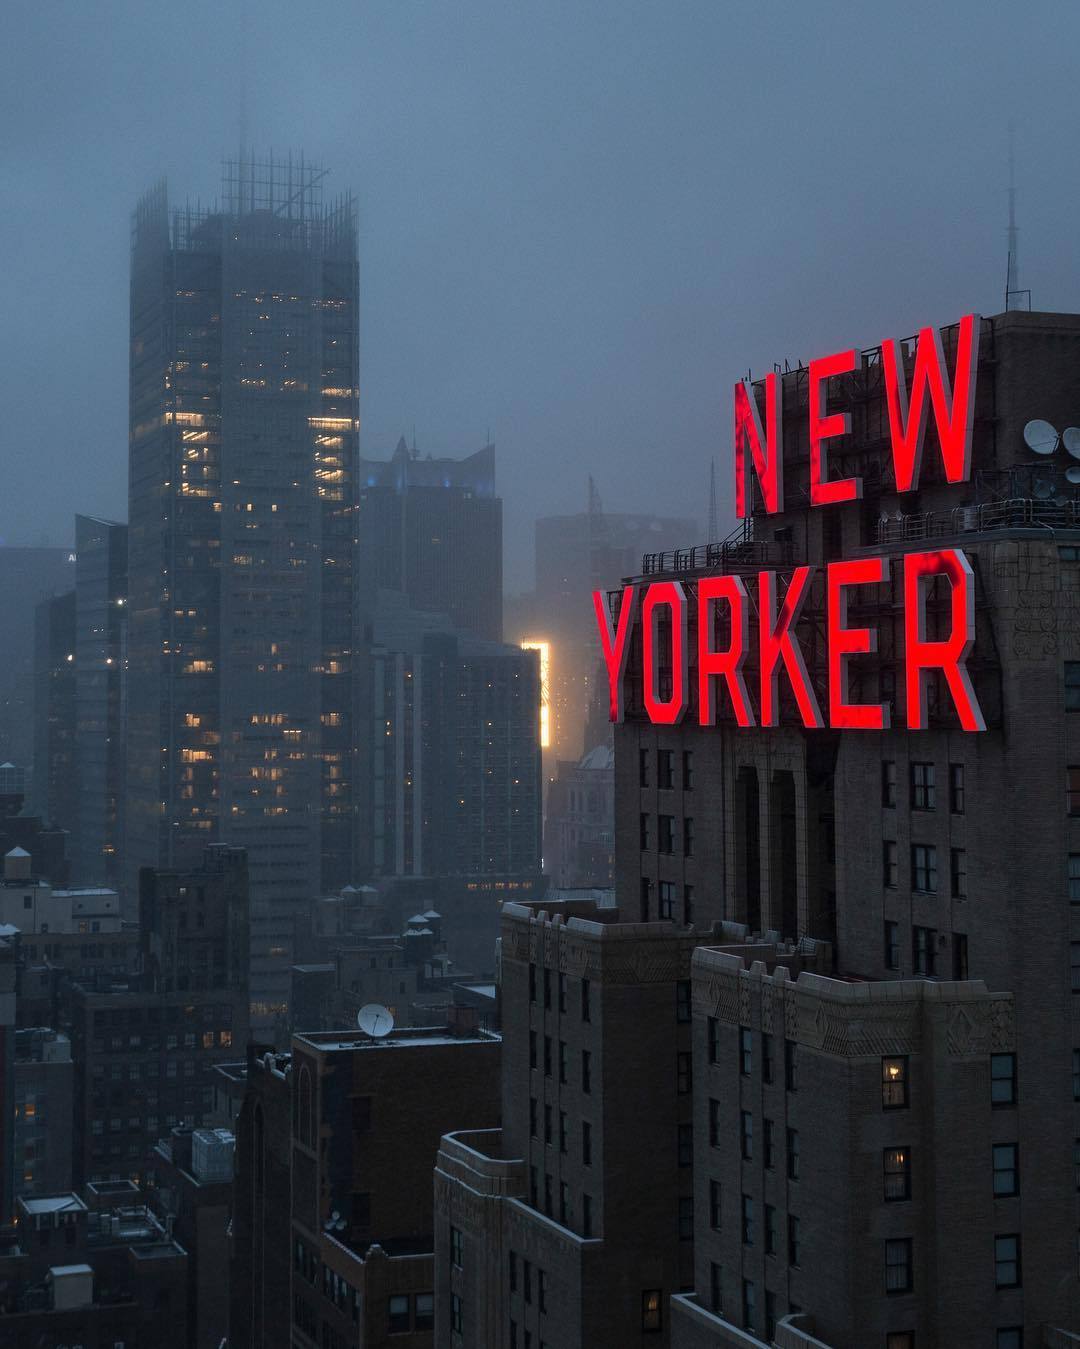 The New Yorker, A Wyndham Hotel on a foggy evening.